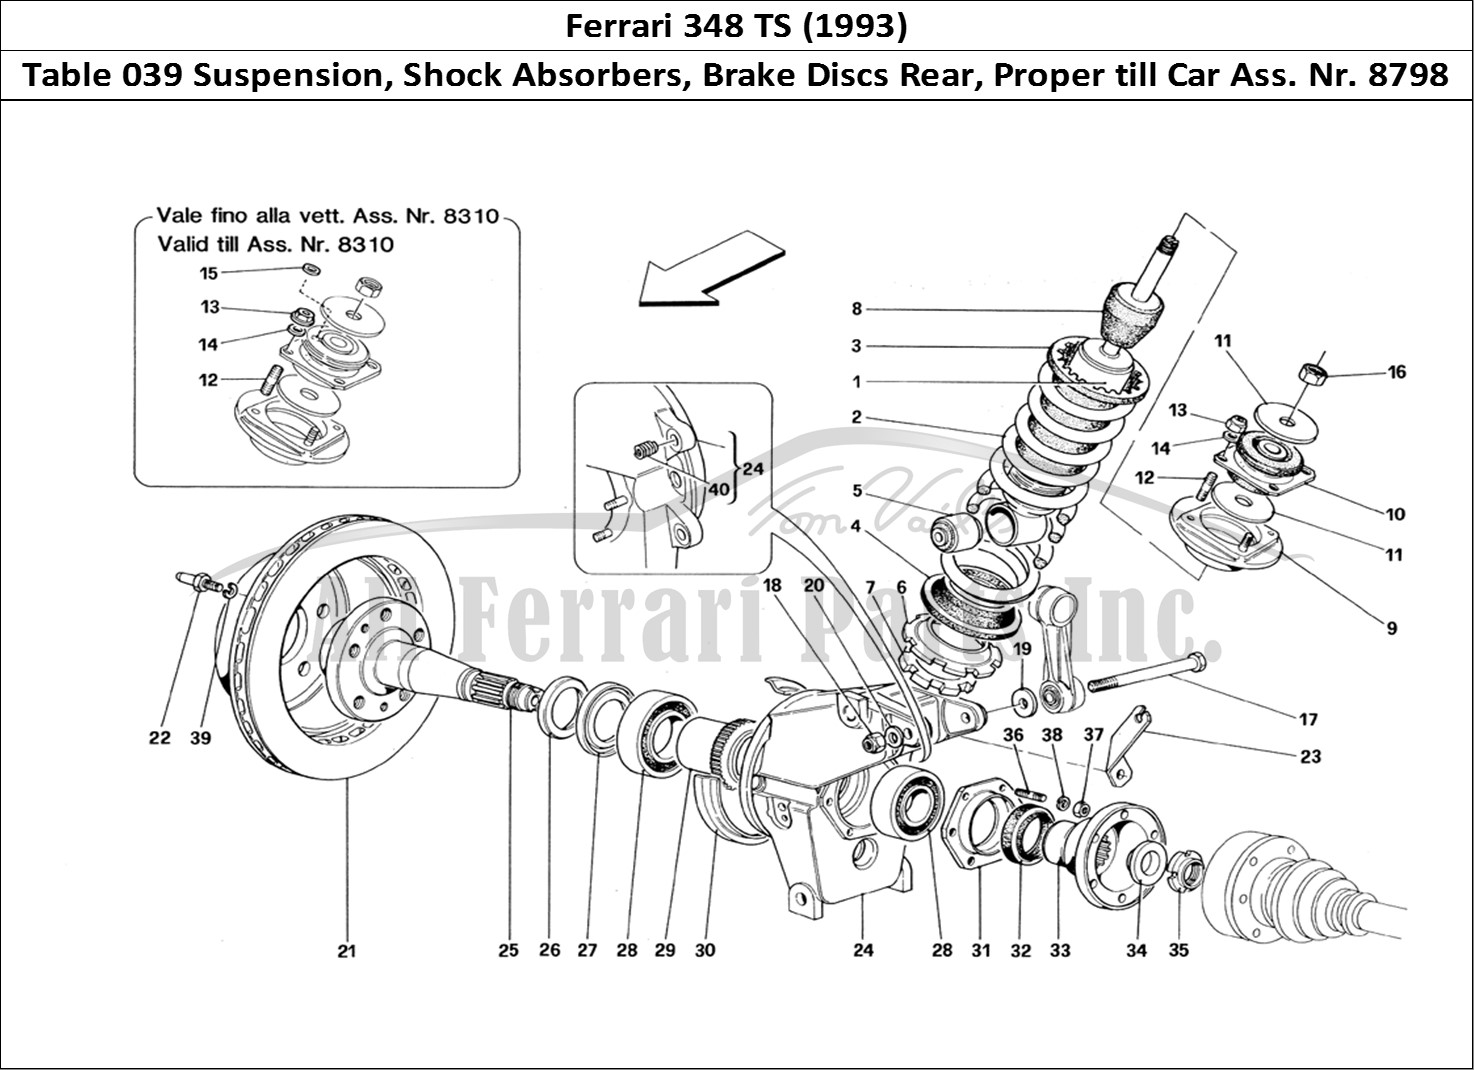 Ferrari Parts Ferrari 348 TB (1993) Page 039 Rear Suspension - Shock A